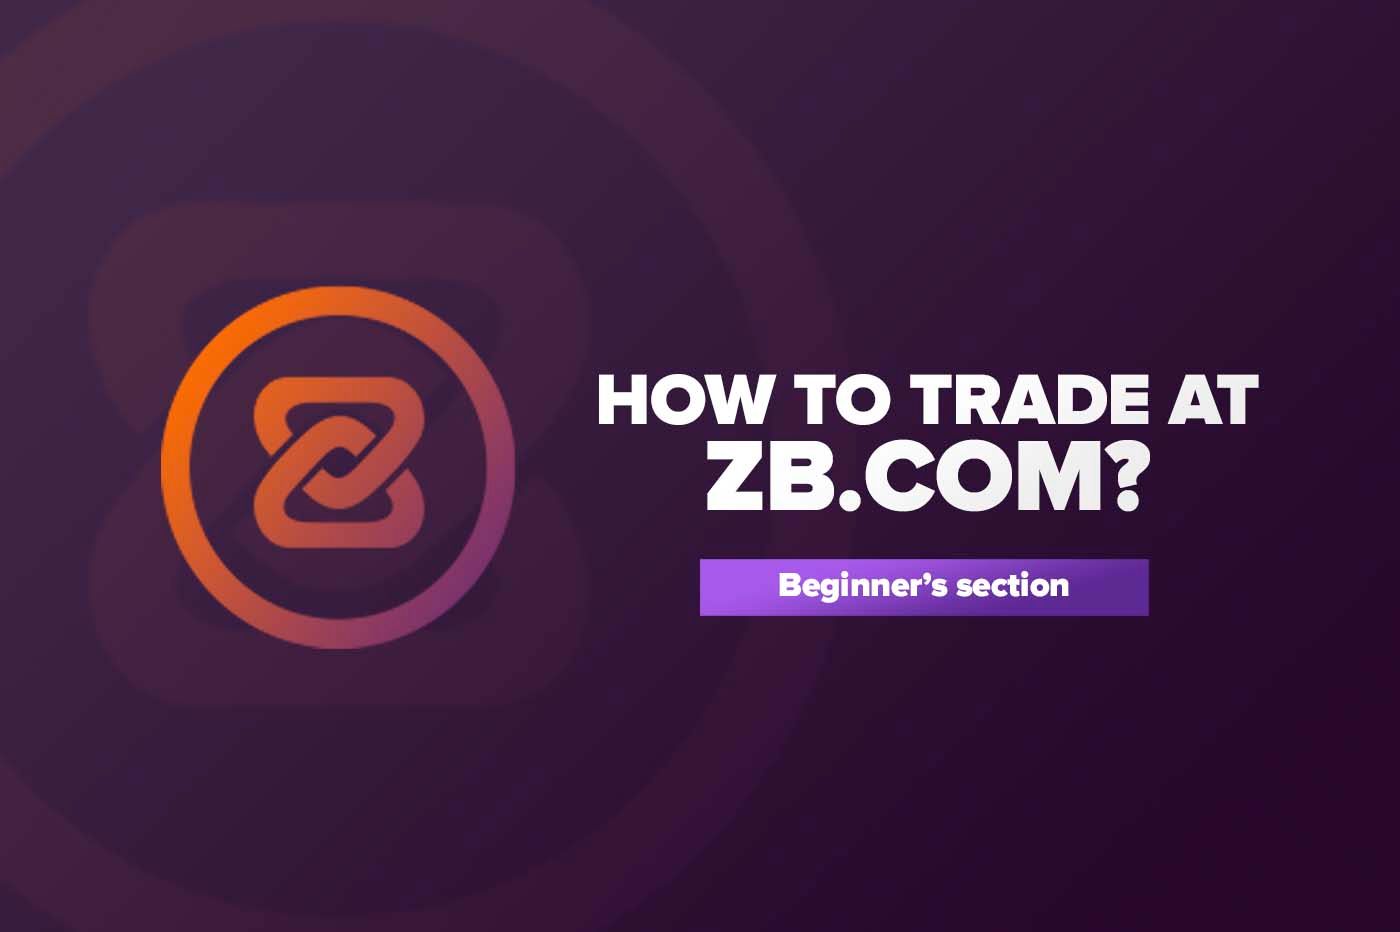 Article Как торговать на ZB.COM?